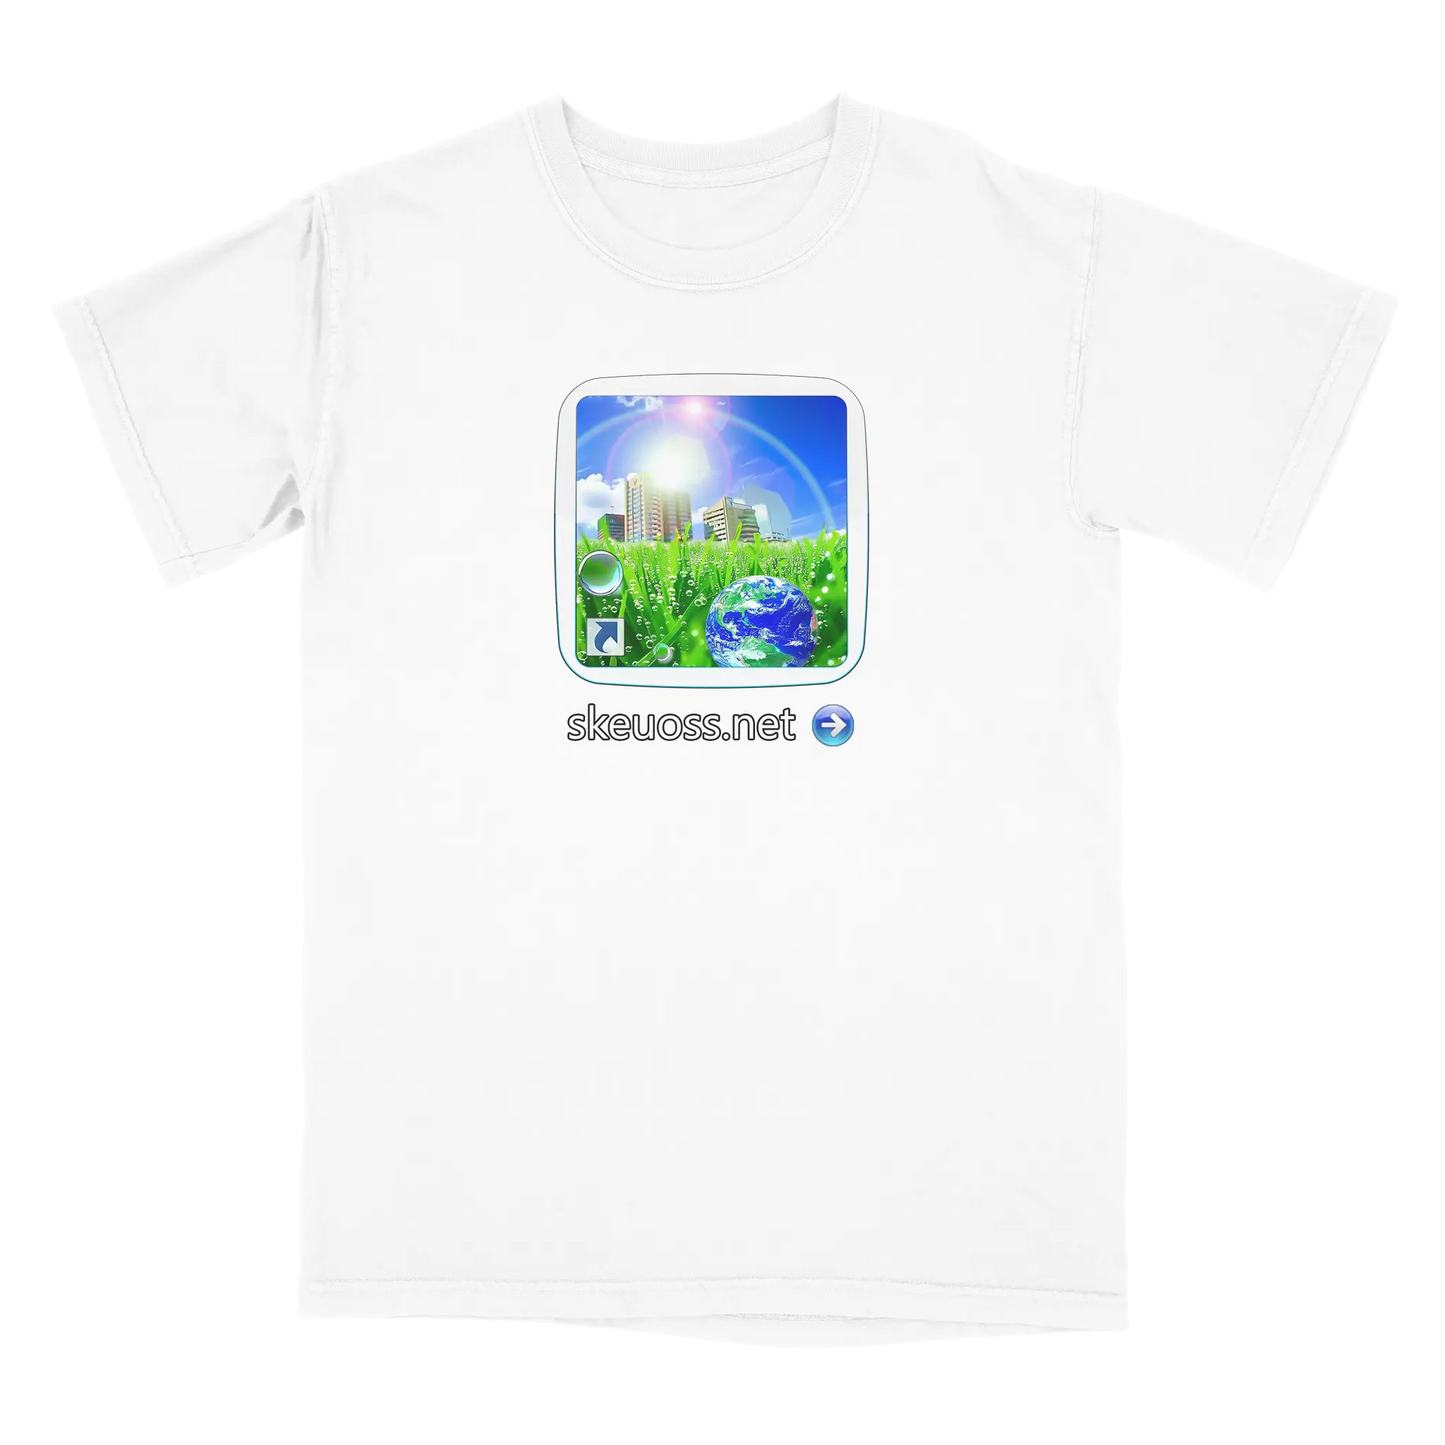 Frutiger Aero T-shirt - User Login Collection - User 247